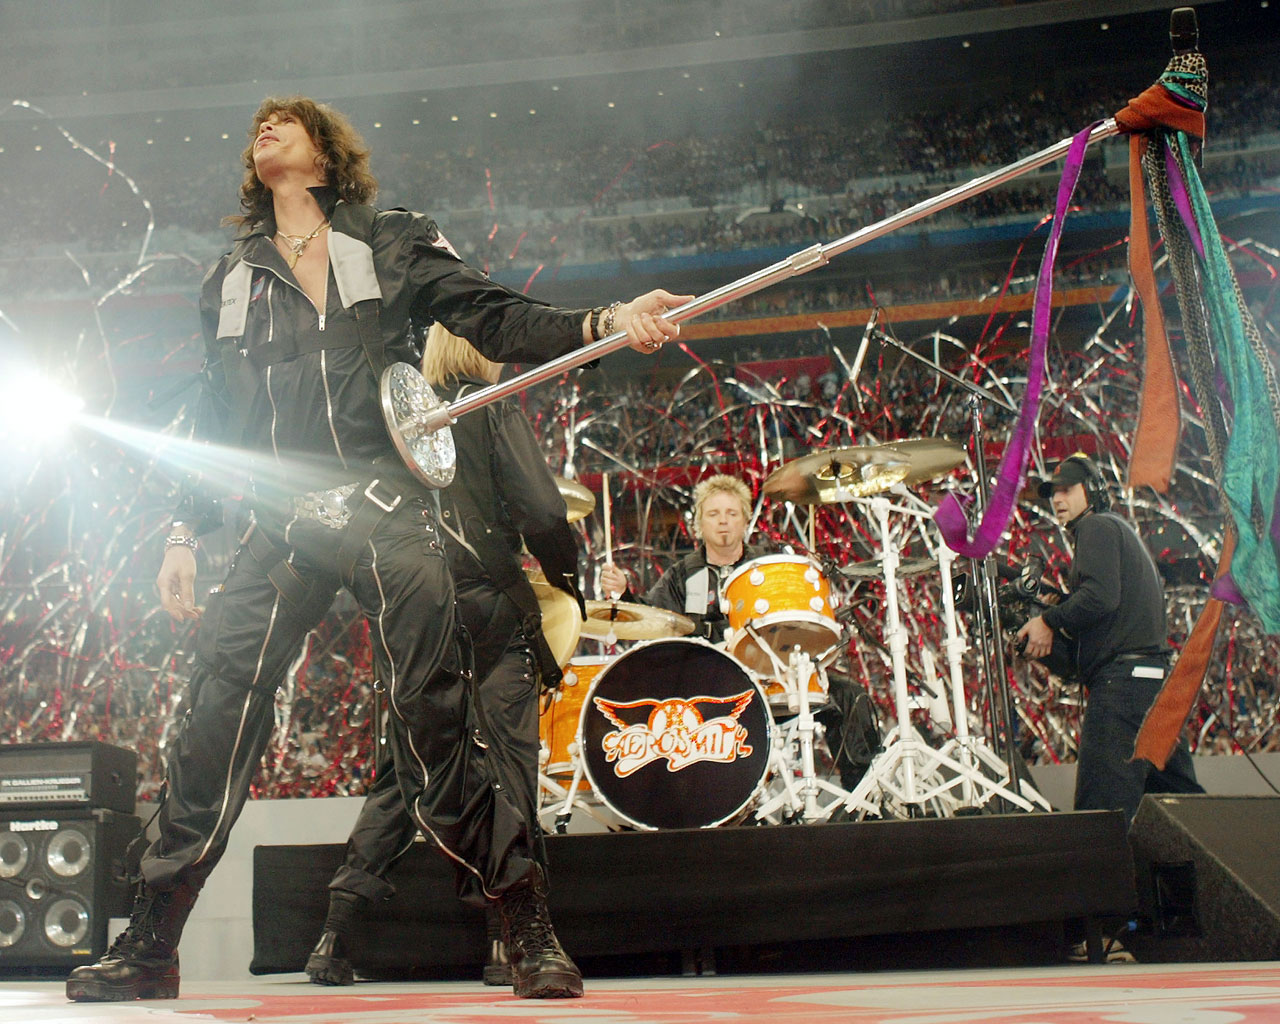 Steven Tyler in fron during Aerosmith stadium concert